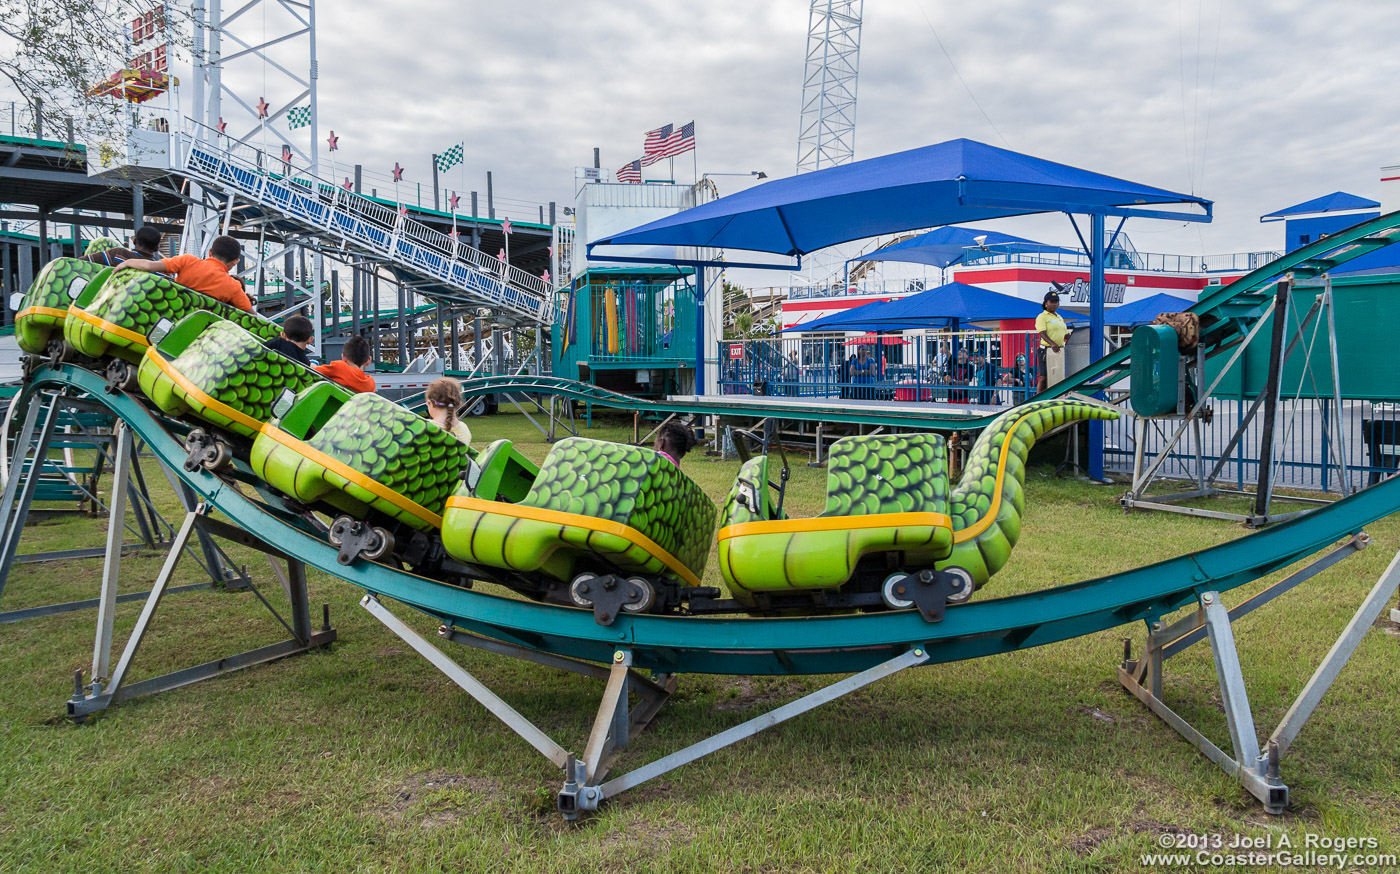 Sea Serpent family roller coaster